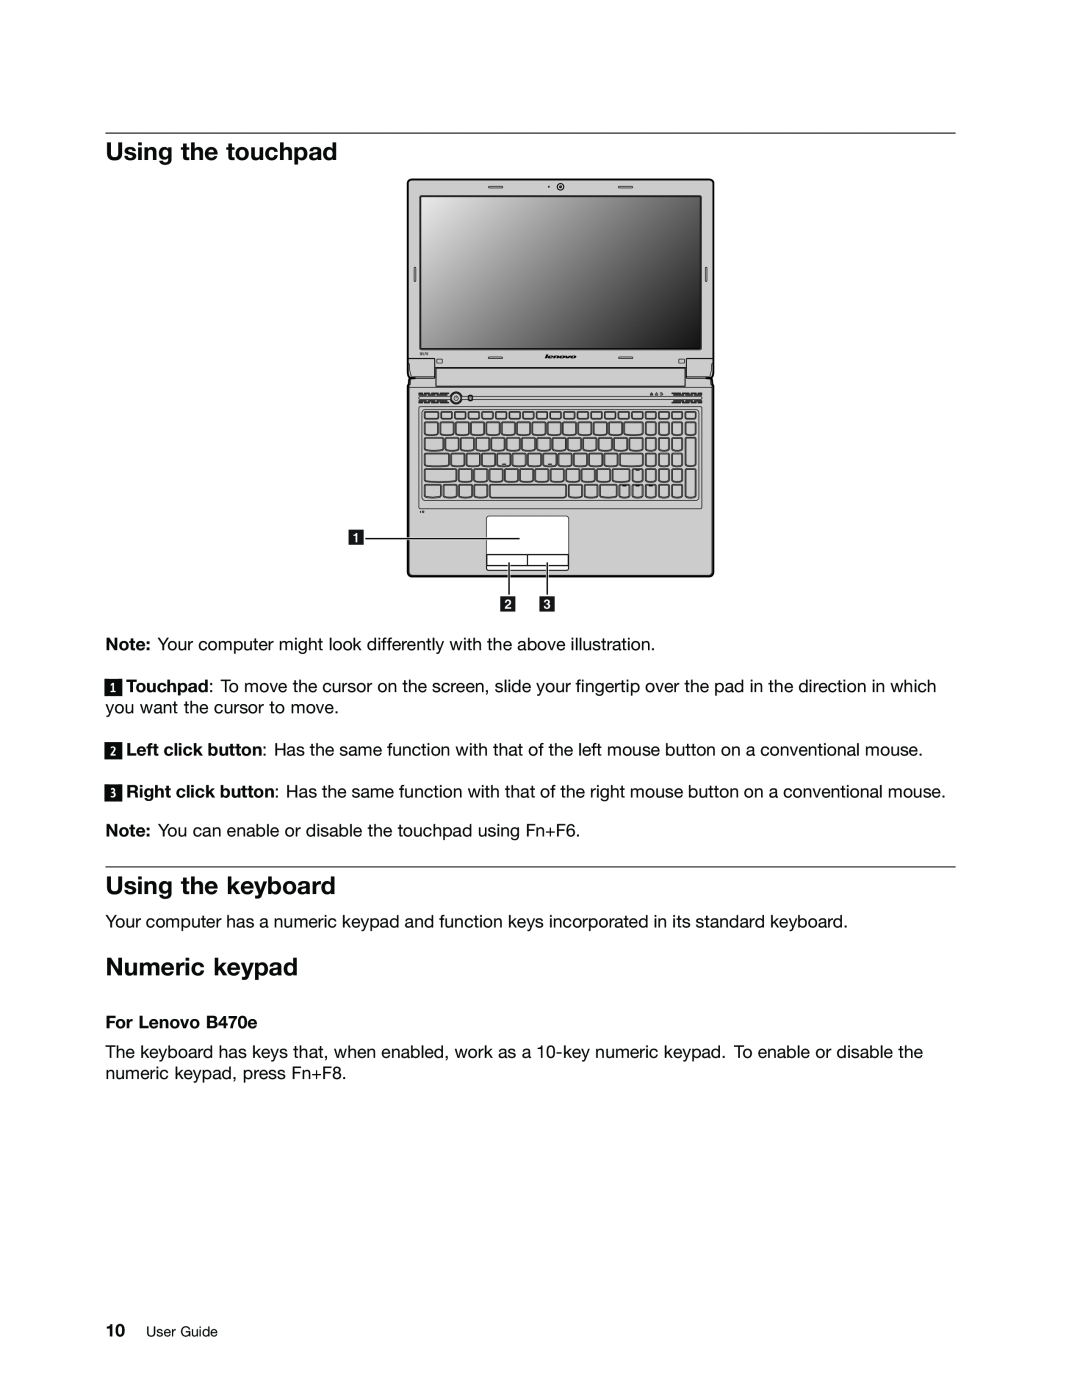 Lenovo B470E manual Using the touchpad, Using the keyboard, Numeric keypad, For Lenovo B470e 